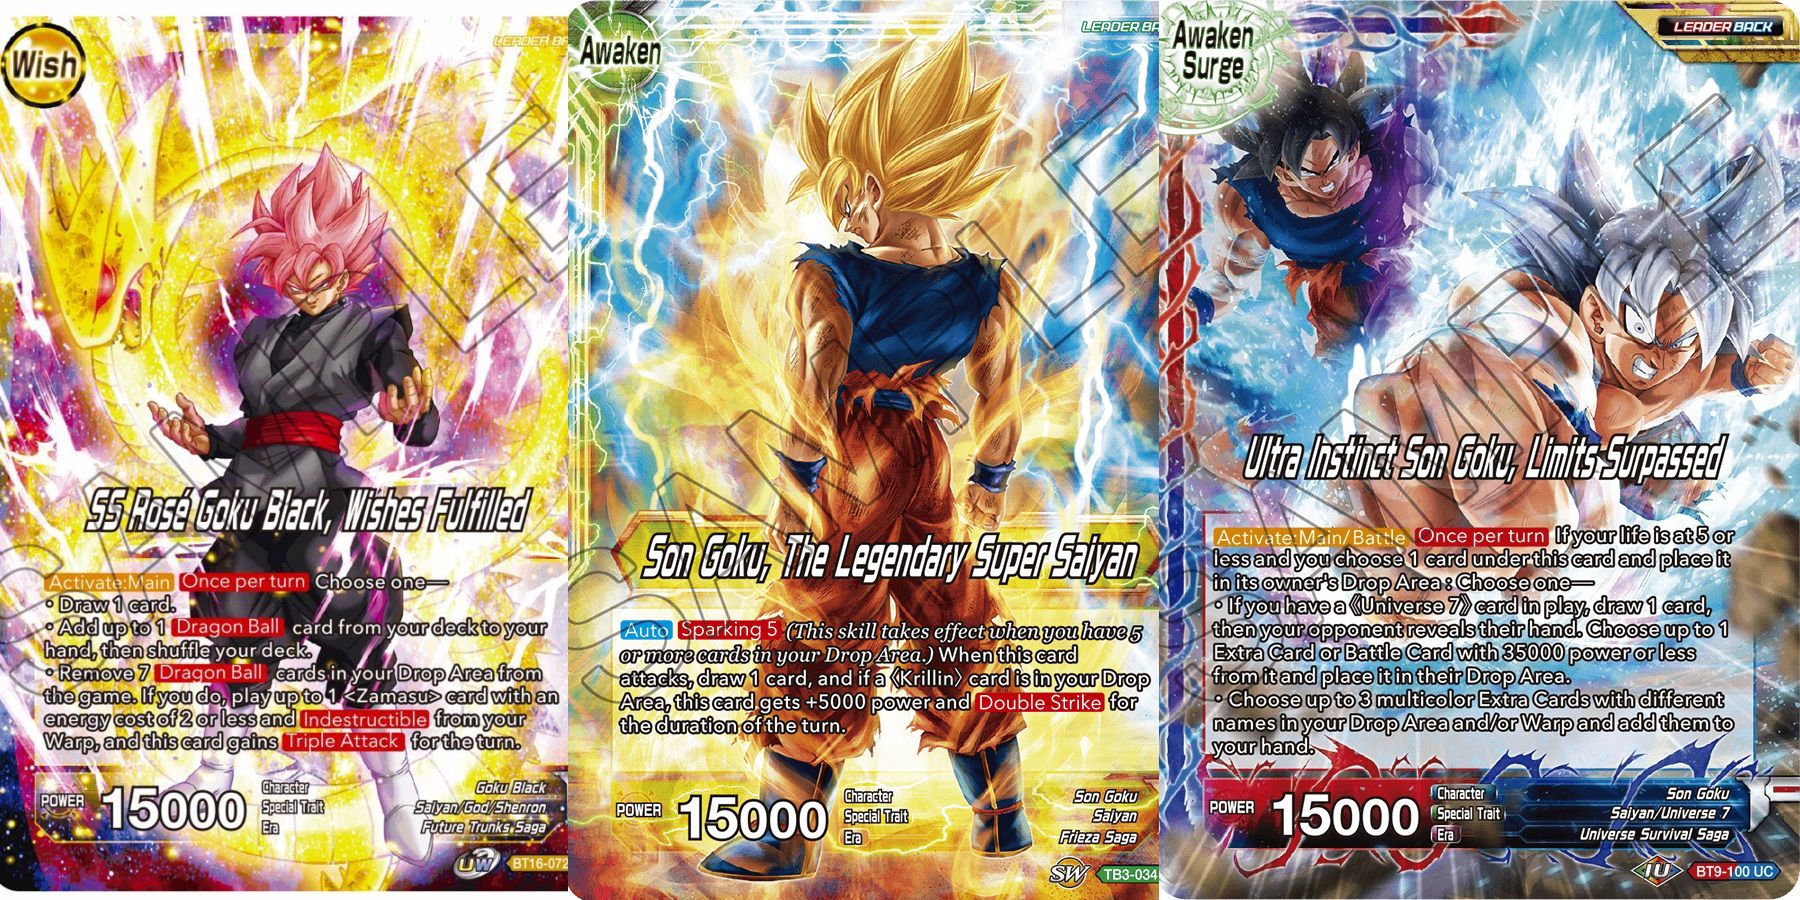 Um Zamasu/Goku Black Wish Leader, um Goku Awaken Leader e um Goku Awaken Surge Leader em Dragon Ball Super Card Game